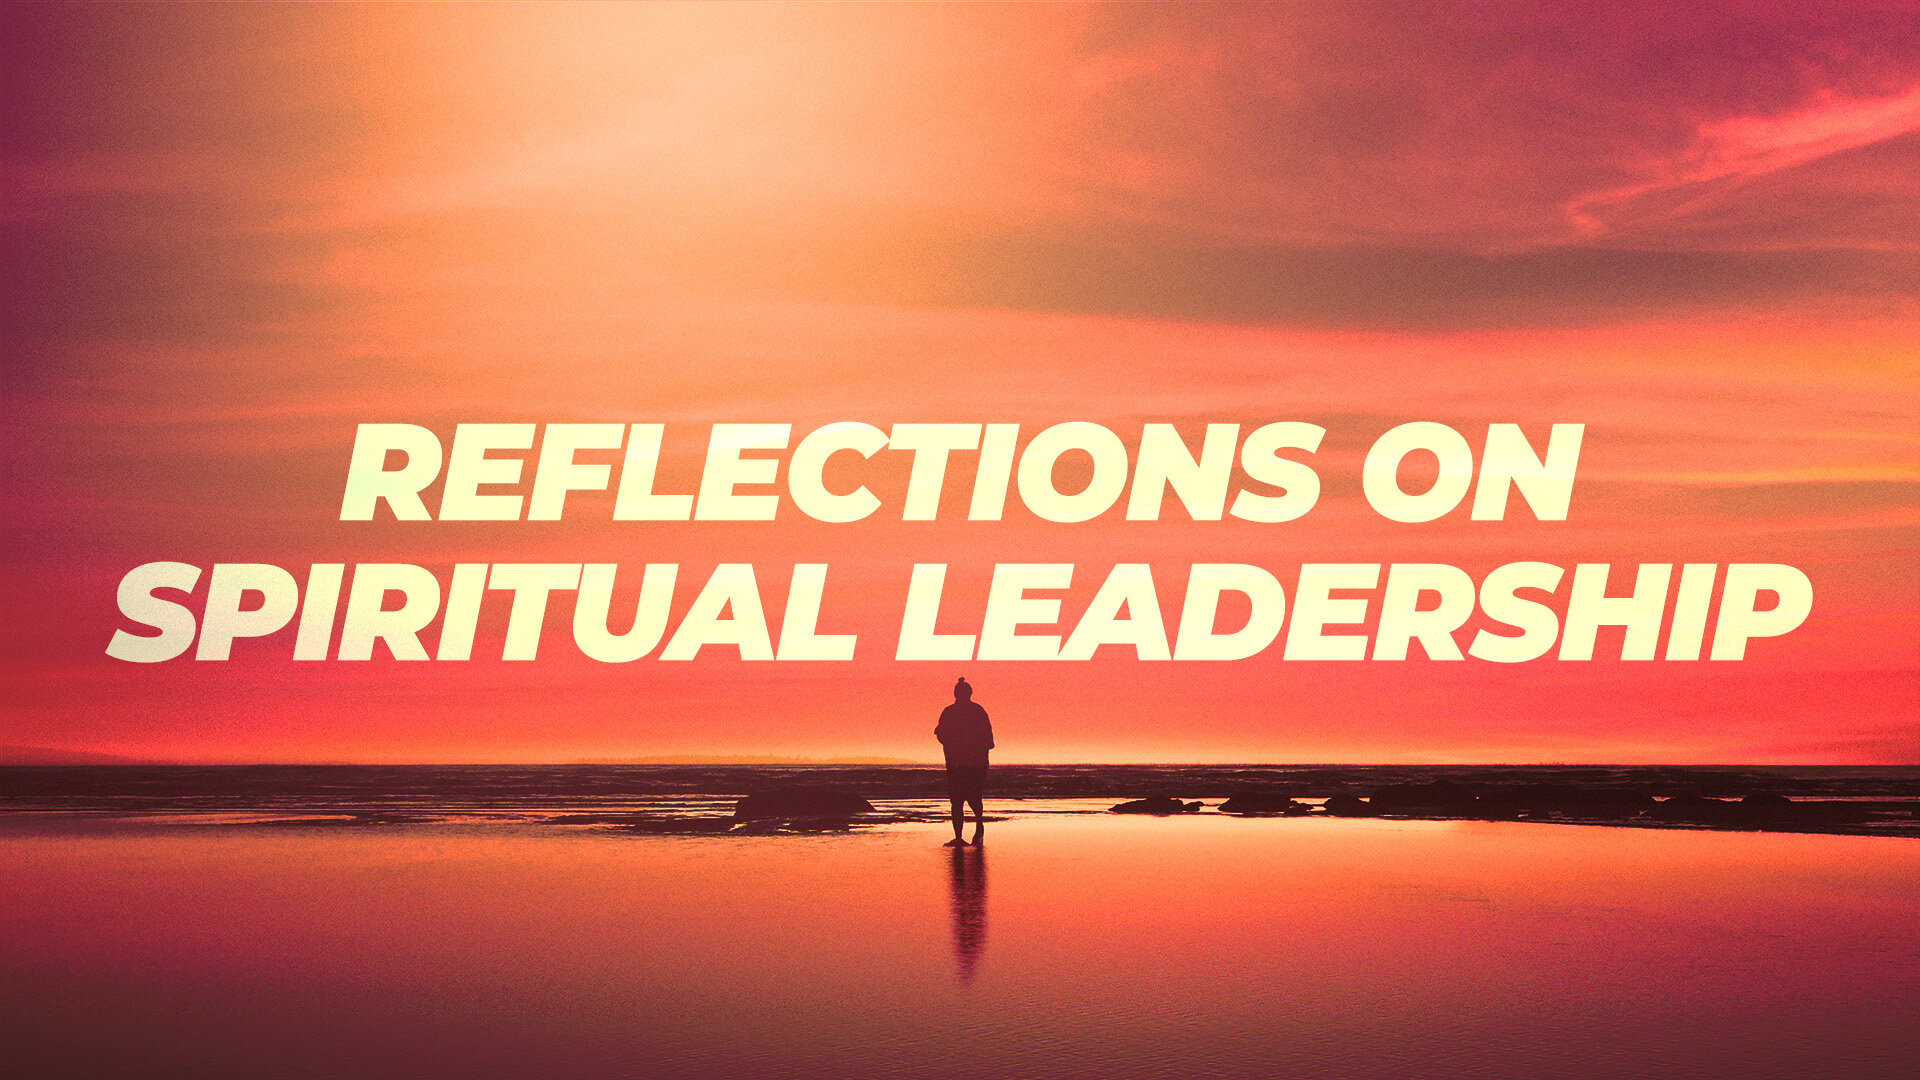 Reflections On Spiritual Leadership (August 2020)